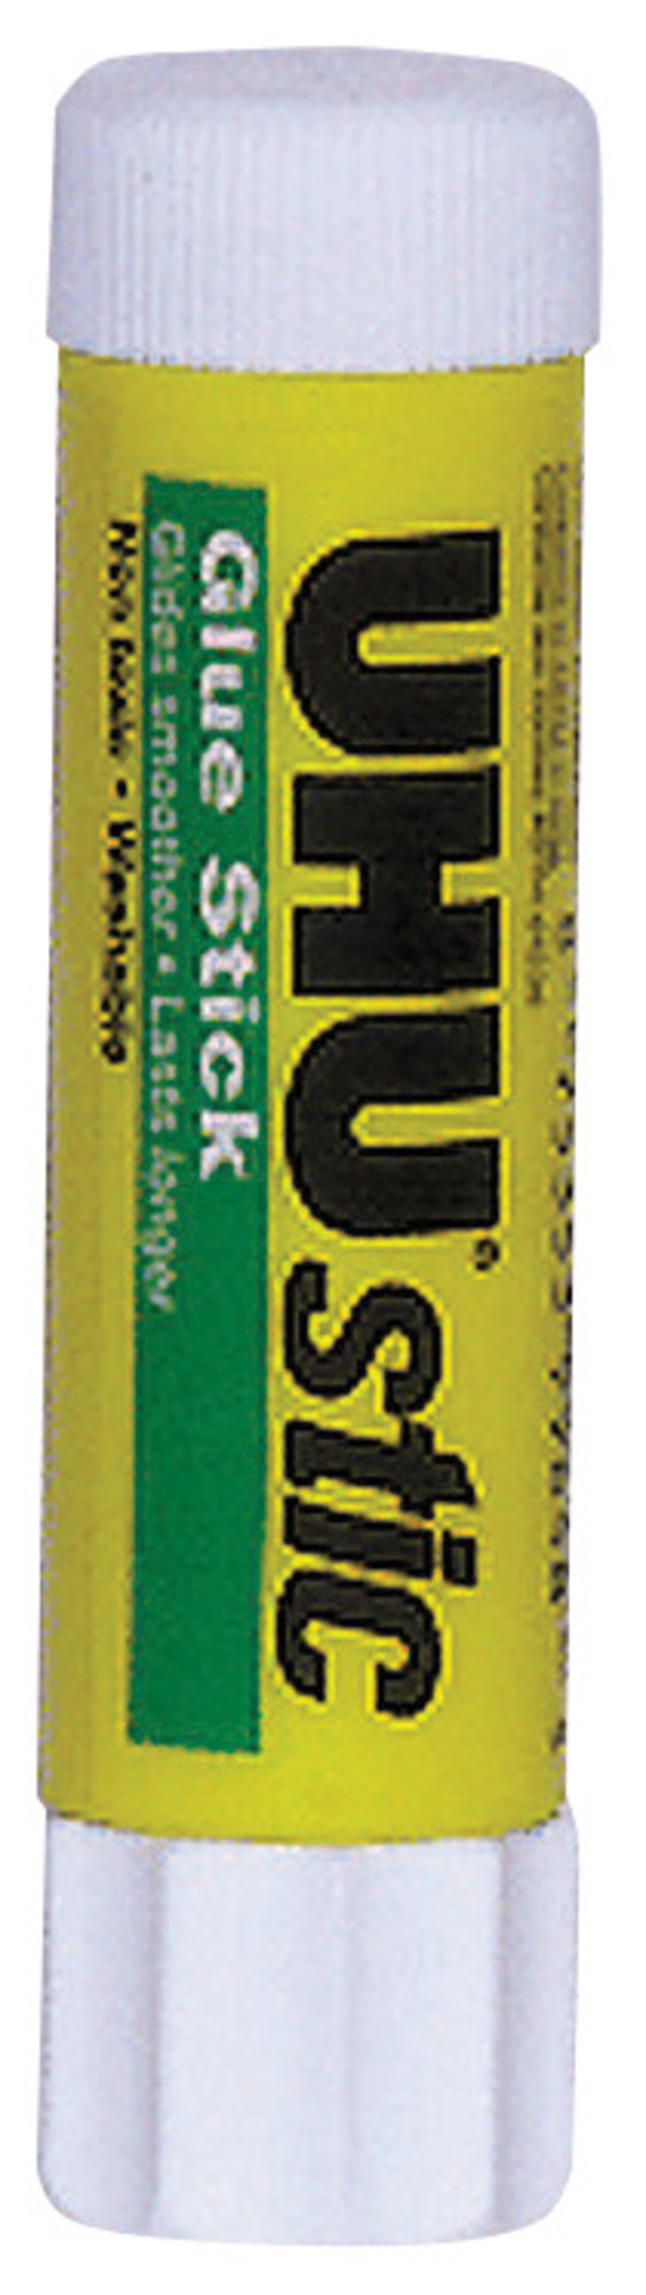 Glue Sticks, Item Number 247232